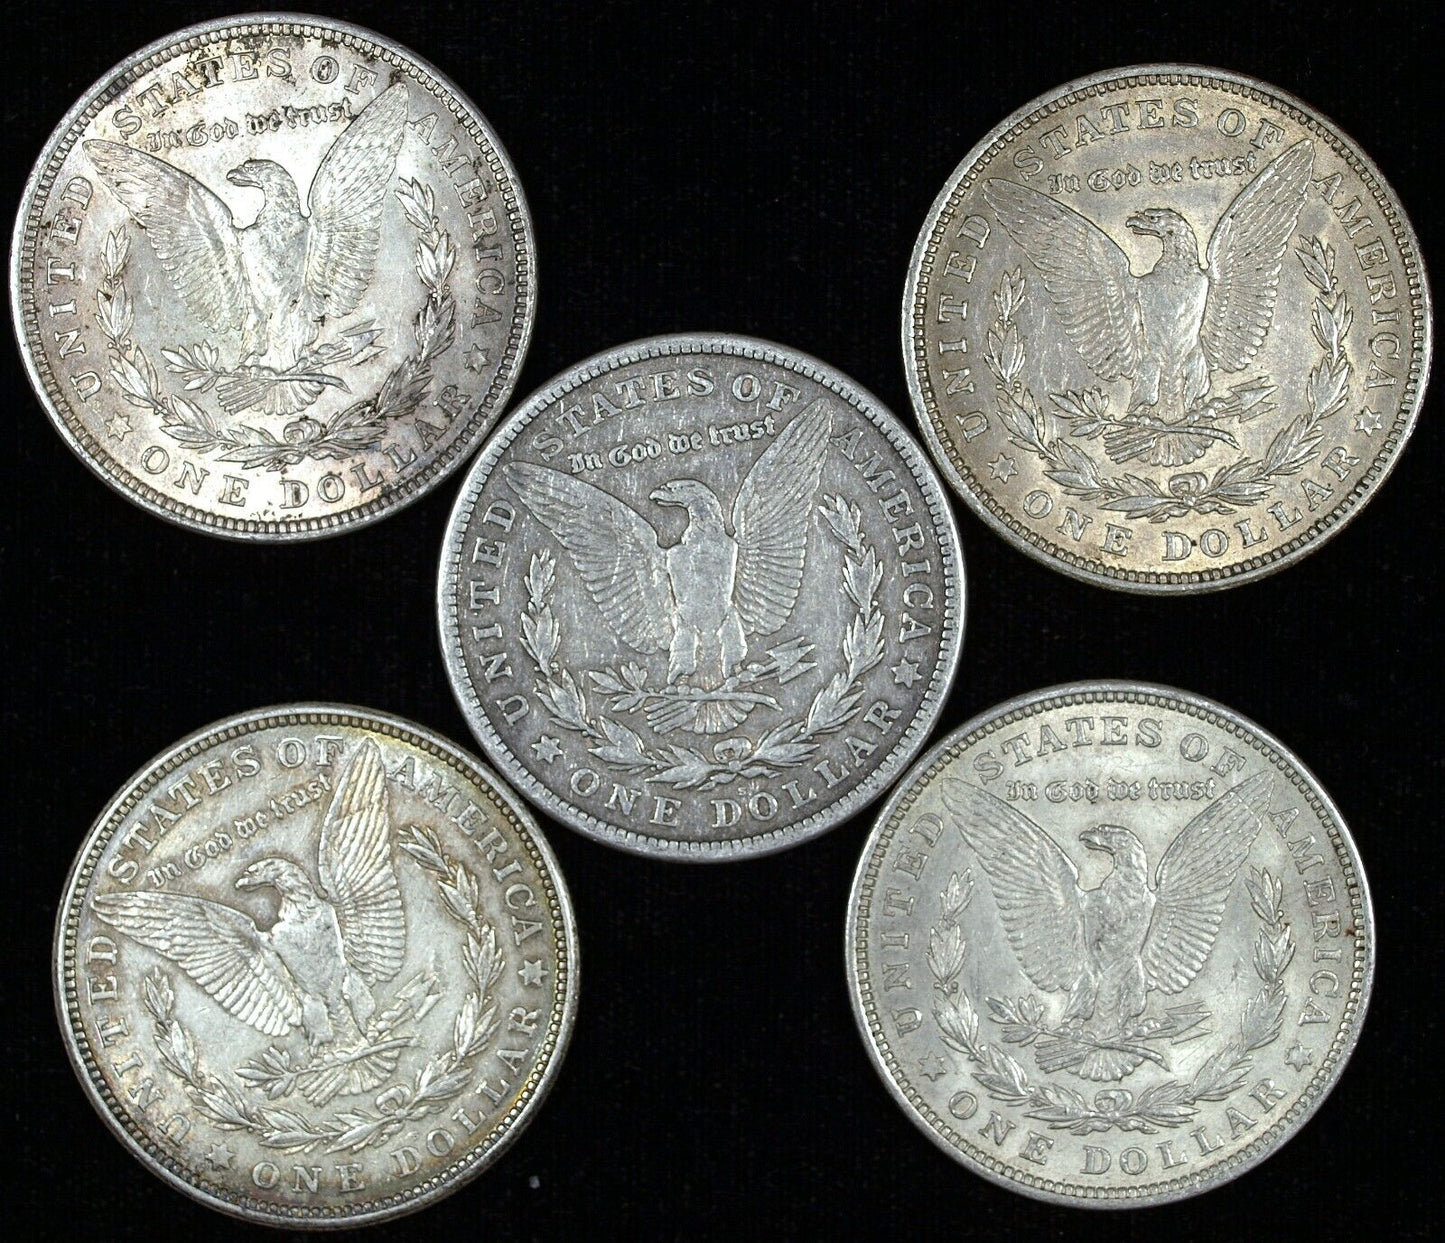 Lot of 5 1921 Morgan Silver Dollars ☆☆ Circulated ☆☆ Great Set Filler 121